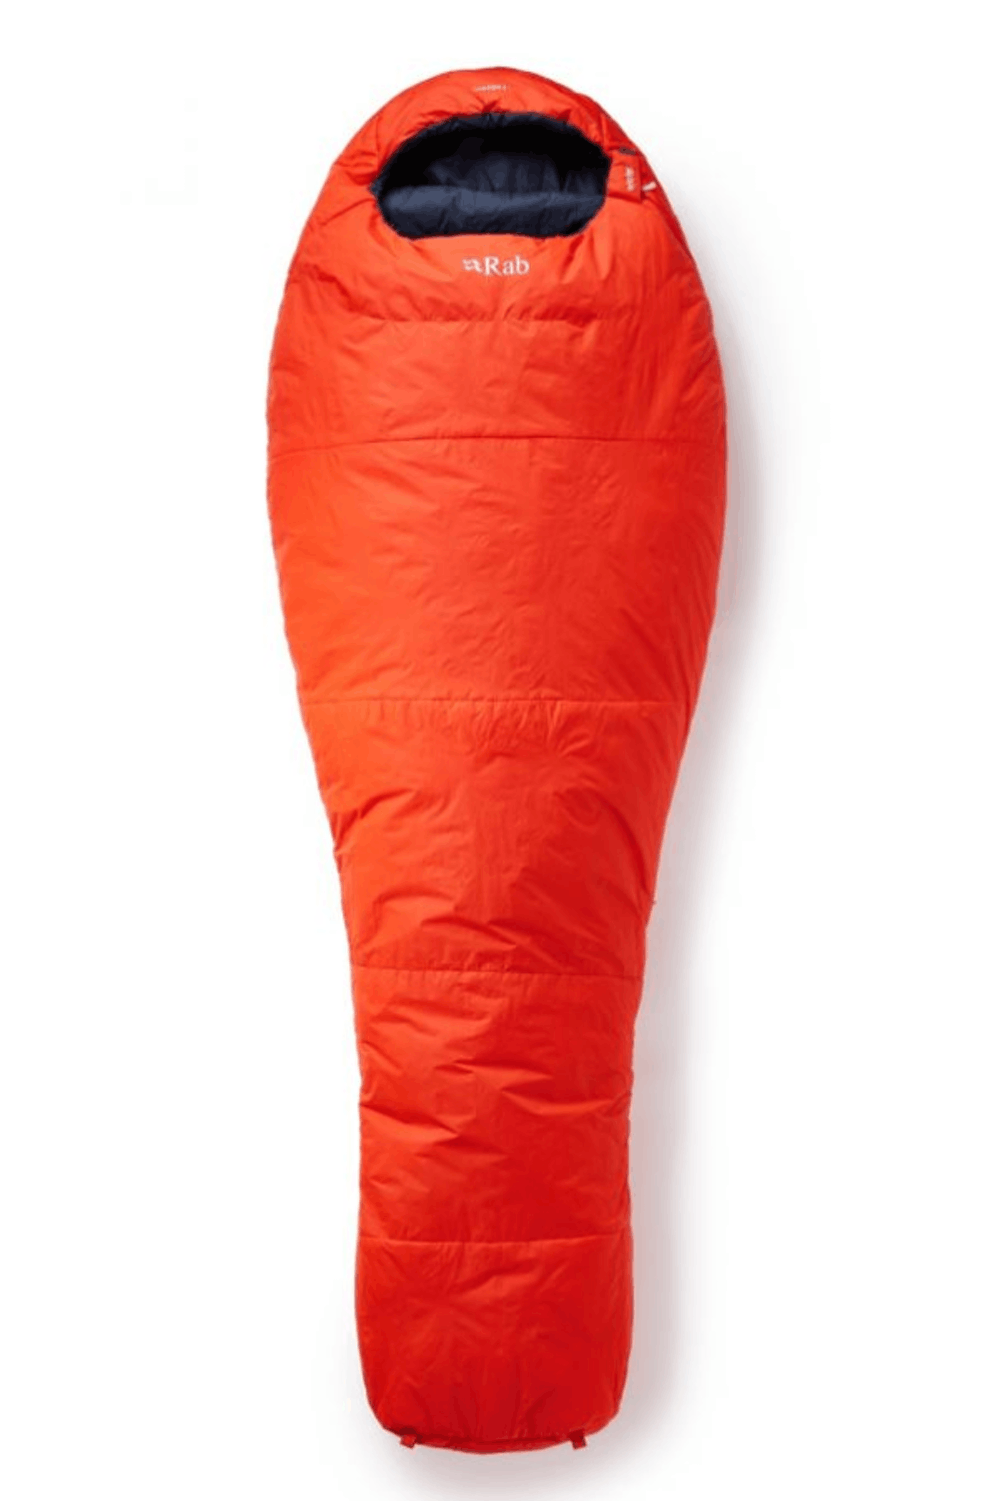 An orange mummy-style sleeping bag with blue lining